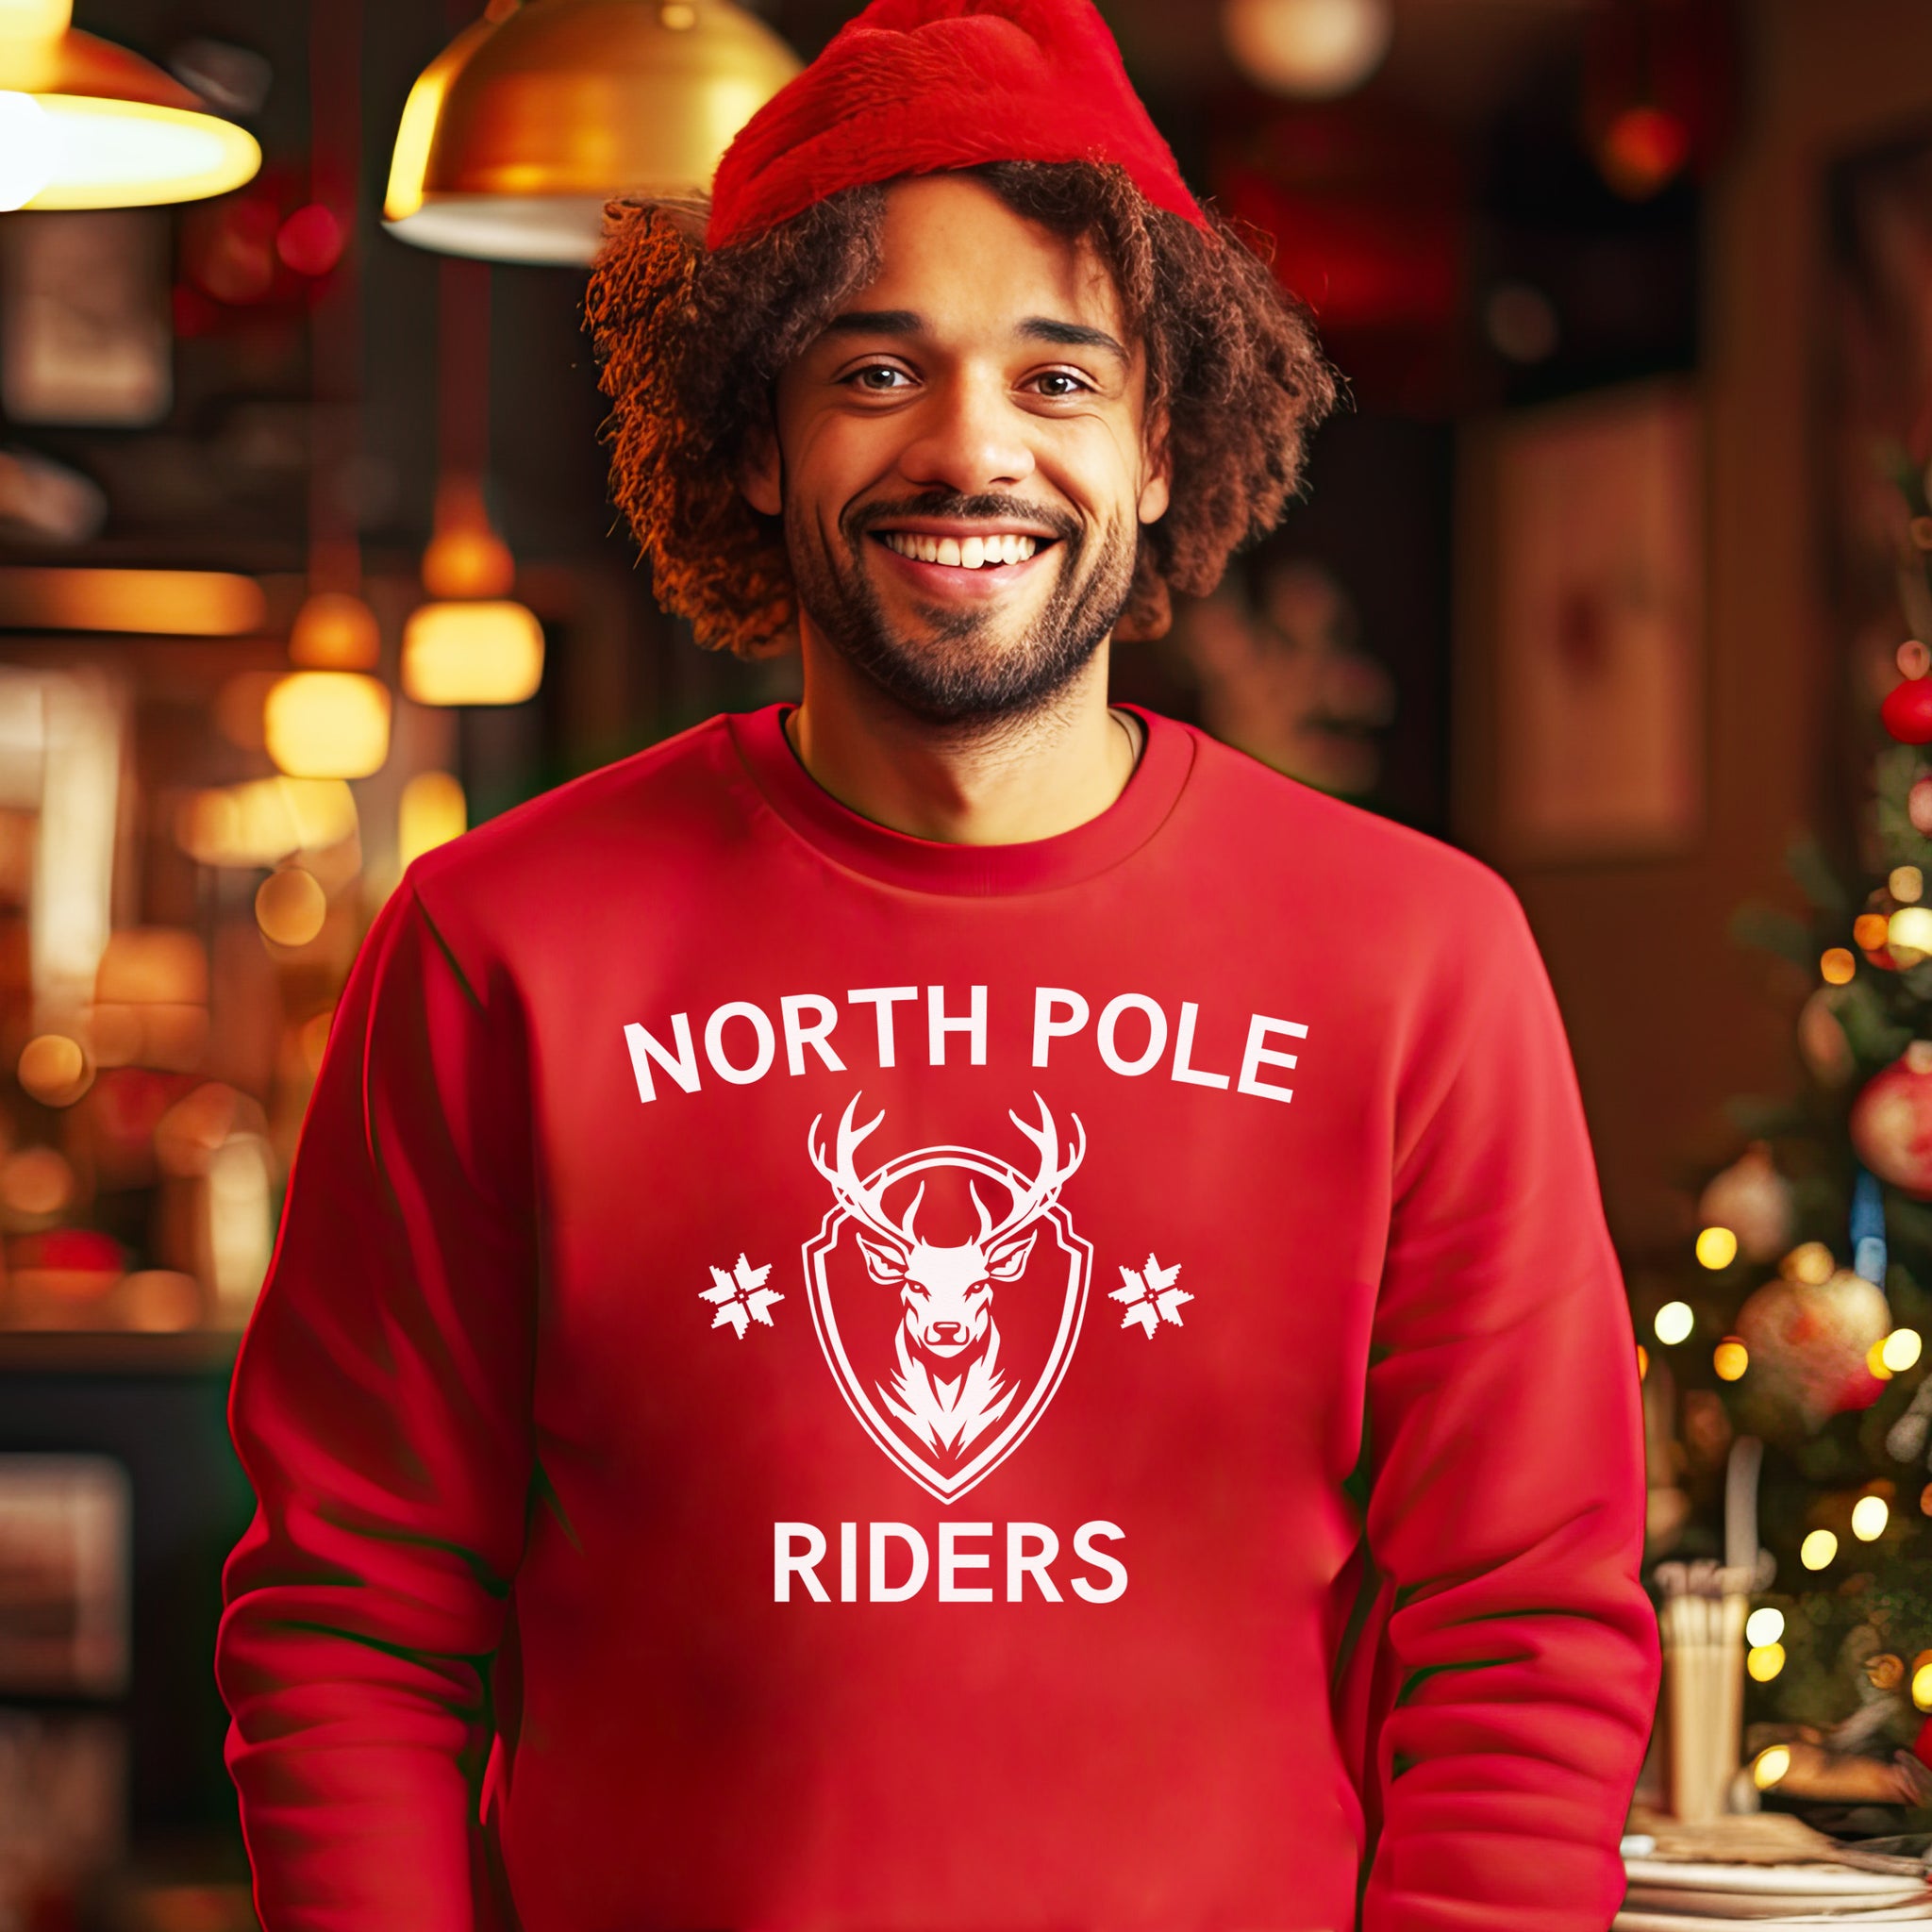 North Pole Riders Christmas Sweater - Christmas Jumper Sweatshirt - All Sizes